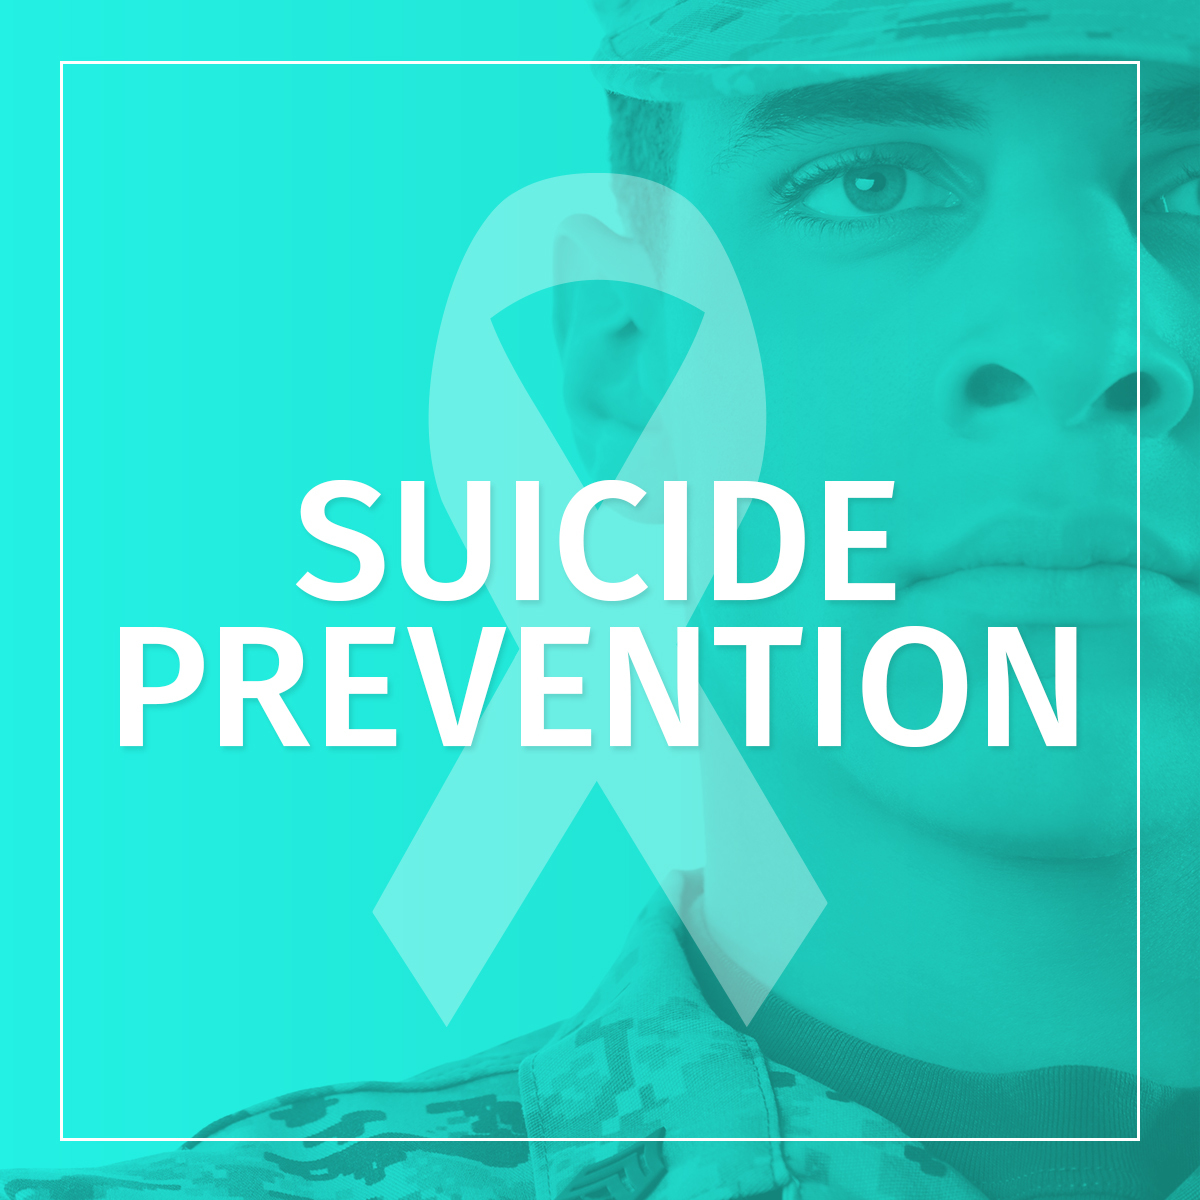 Suicide prevention graphic